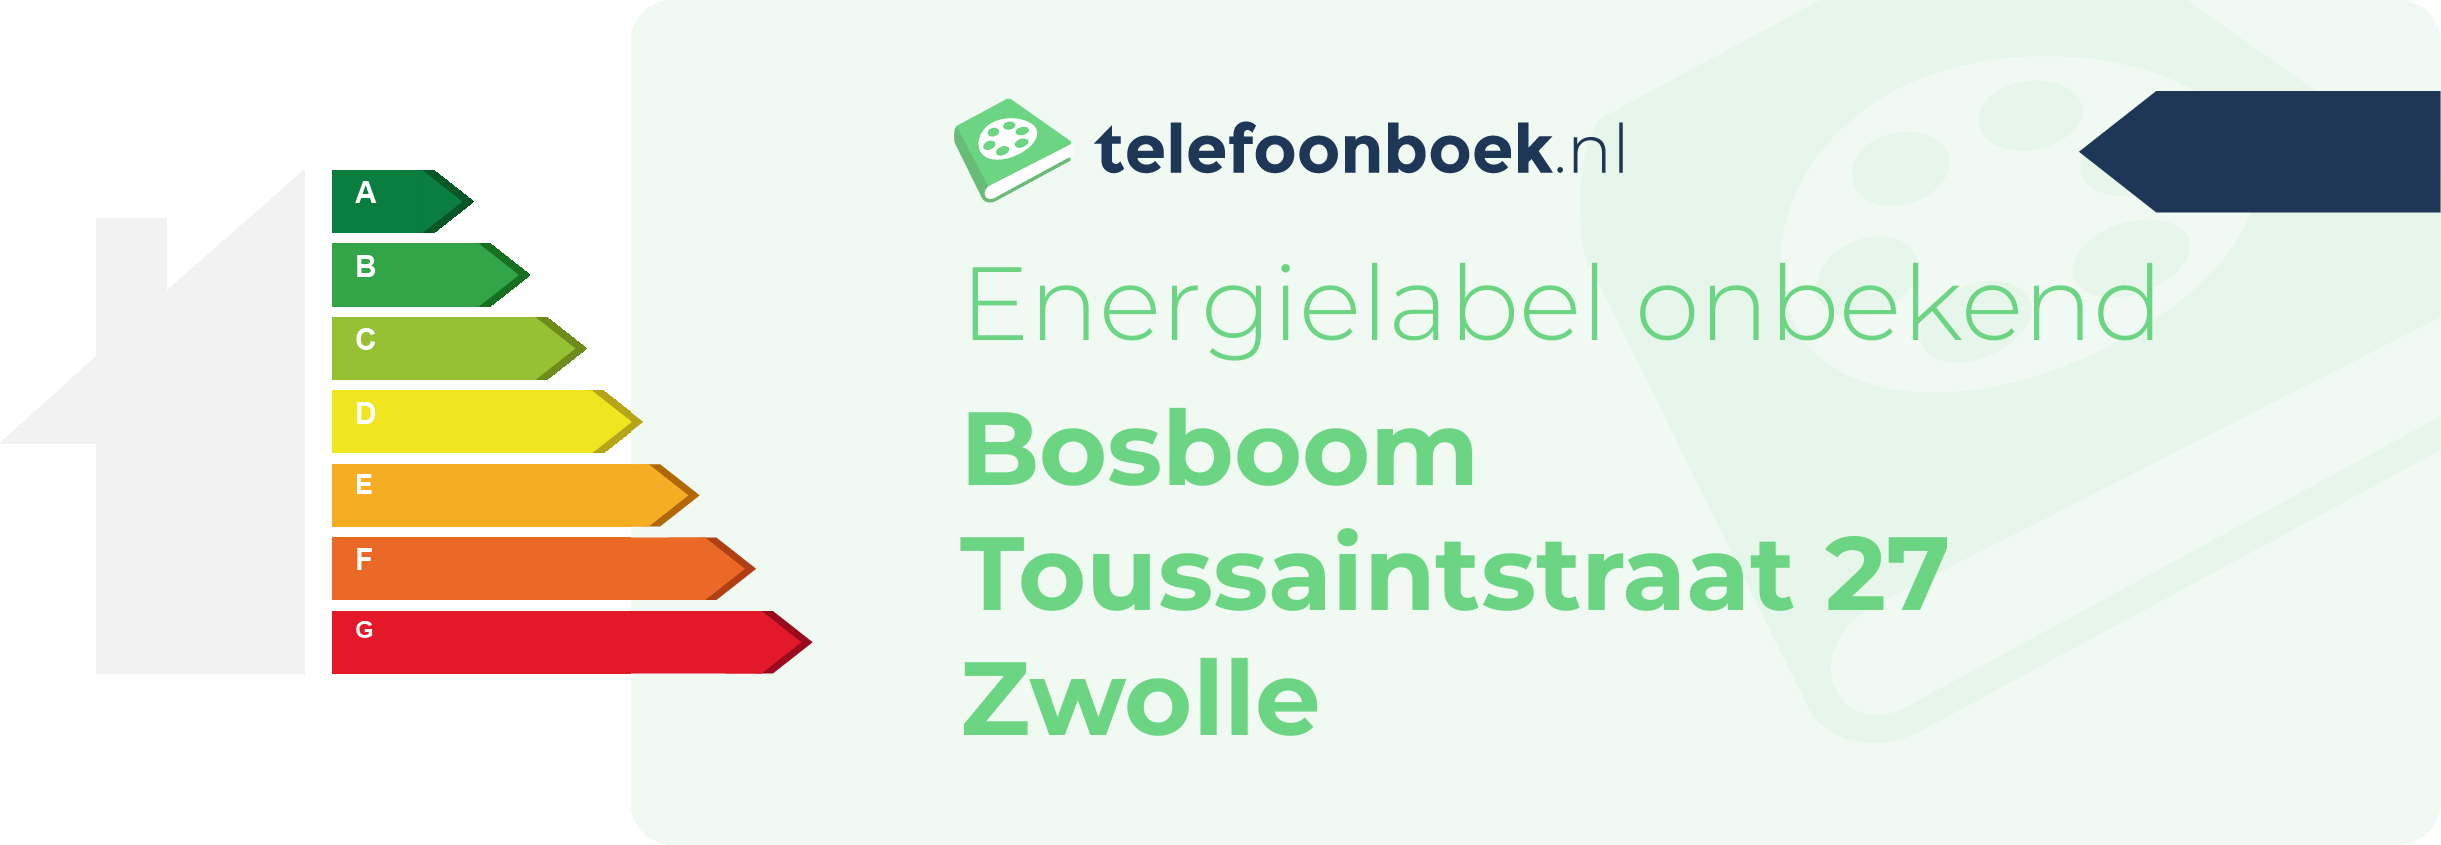 Energielabel Bosboom Toussaintstraat 27 Zwolle